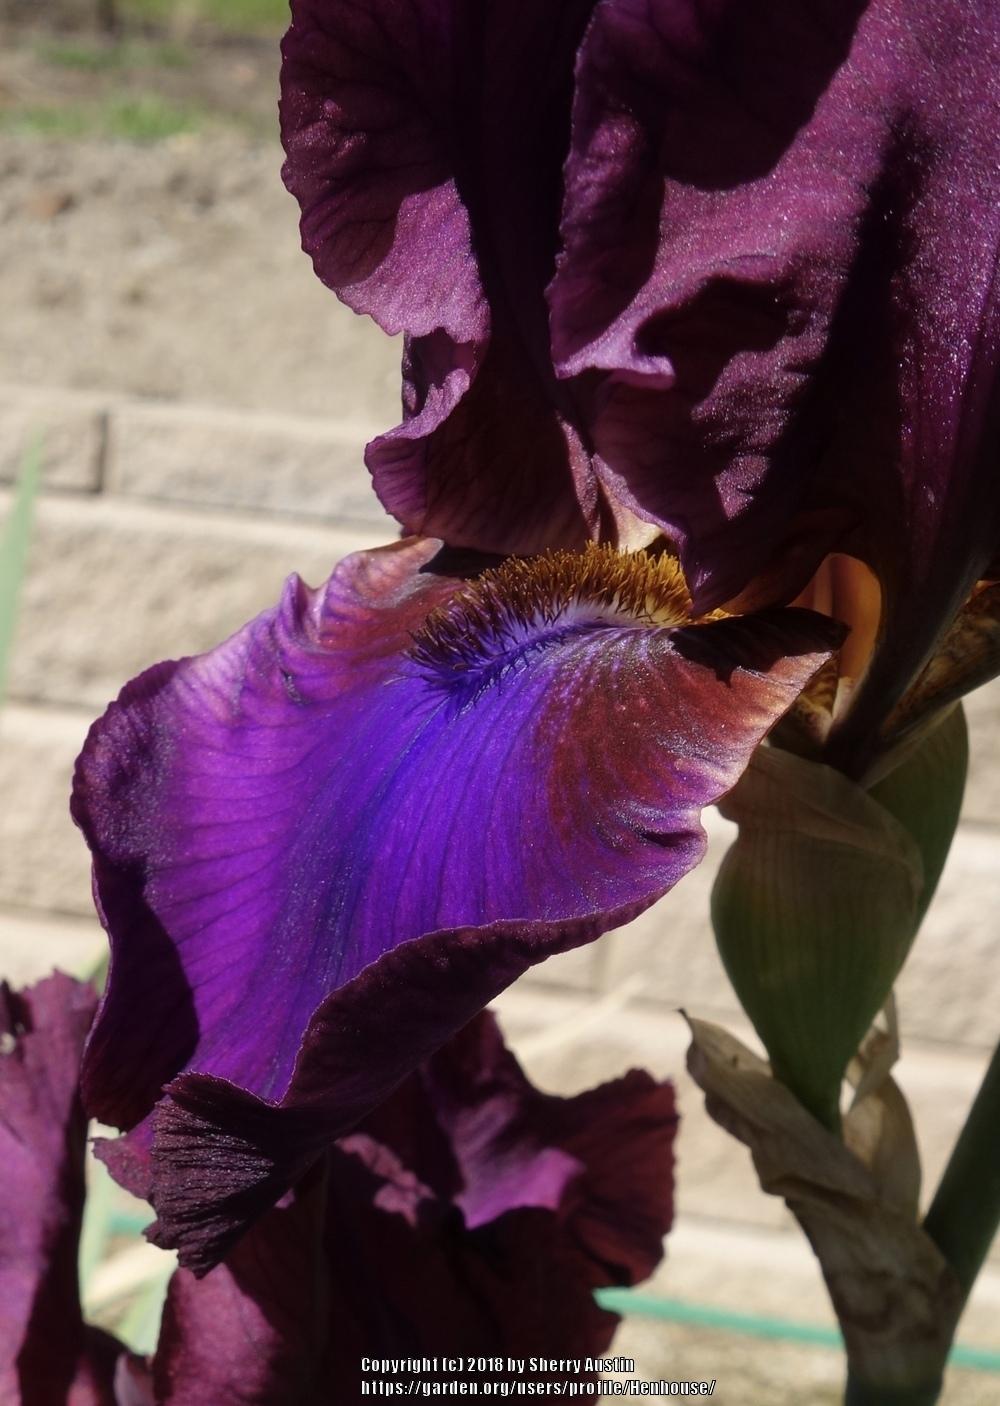 Photo of Tall Bearded Iris (Iris 'Grape Expectations') uploaded by Henhouse